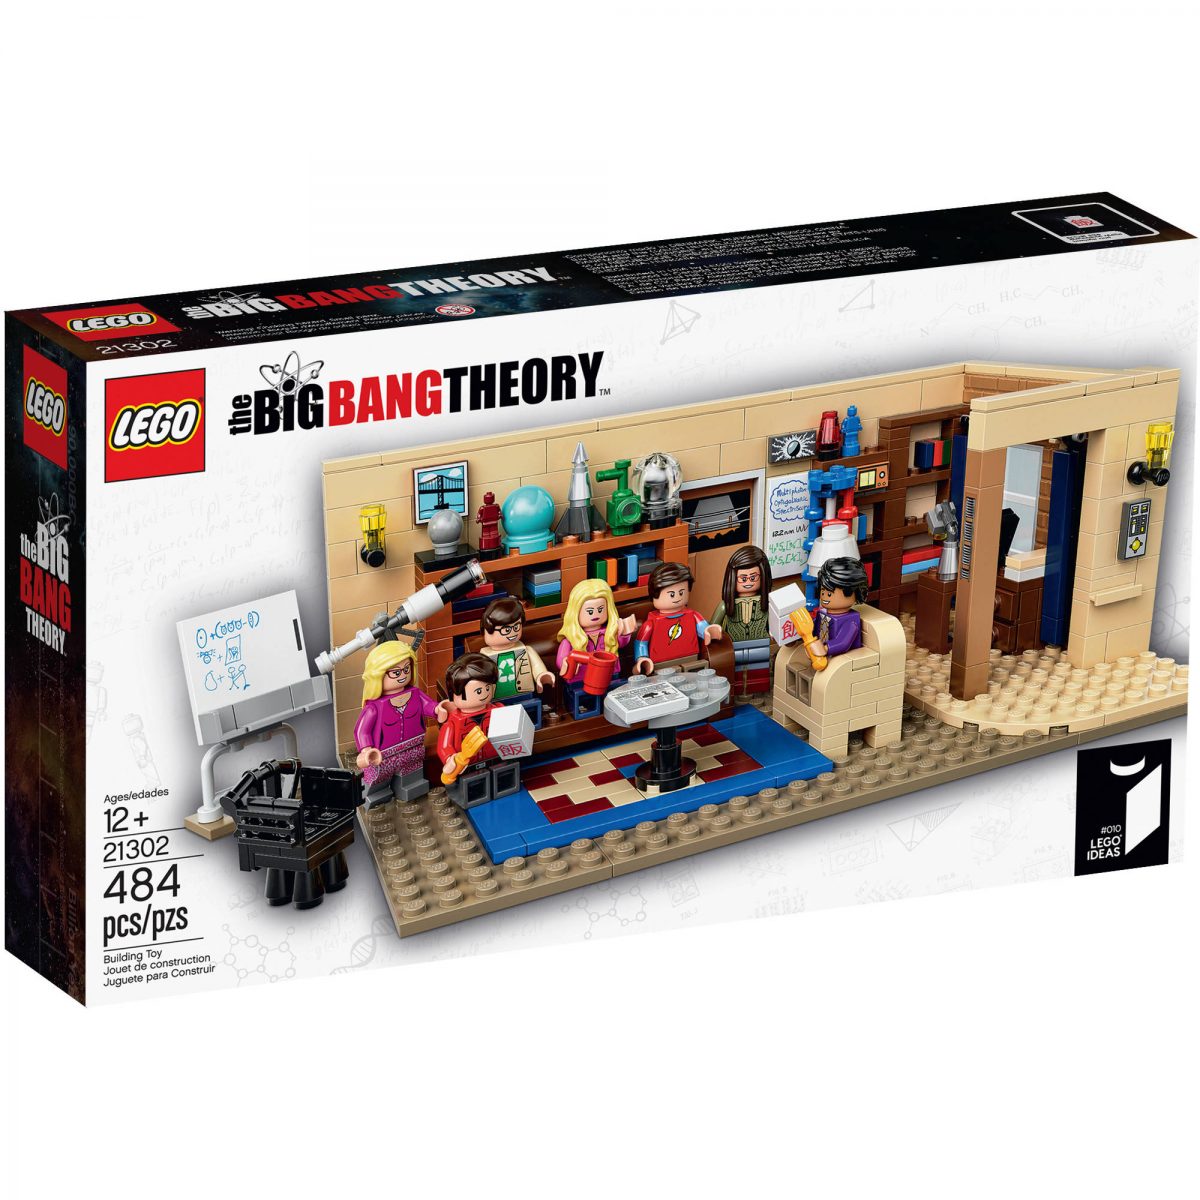 Season 12 of The Big Bang Theory Features a Custom LEGO Brickfast